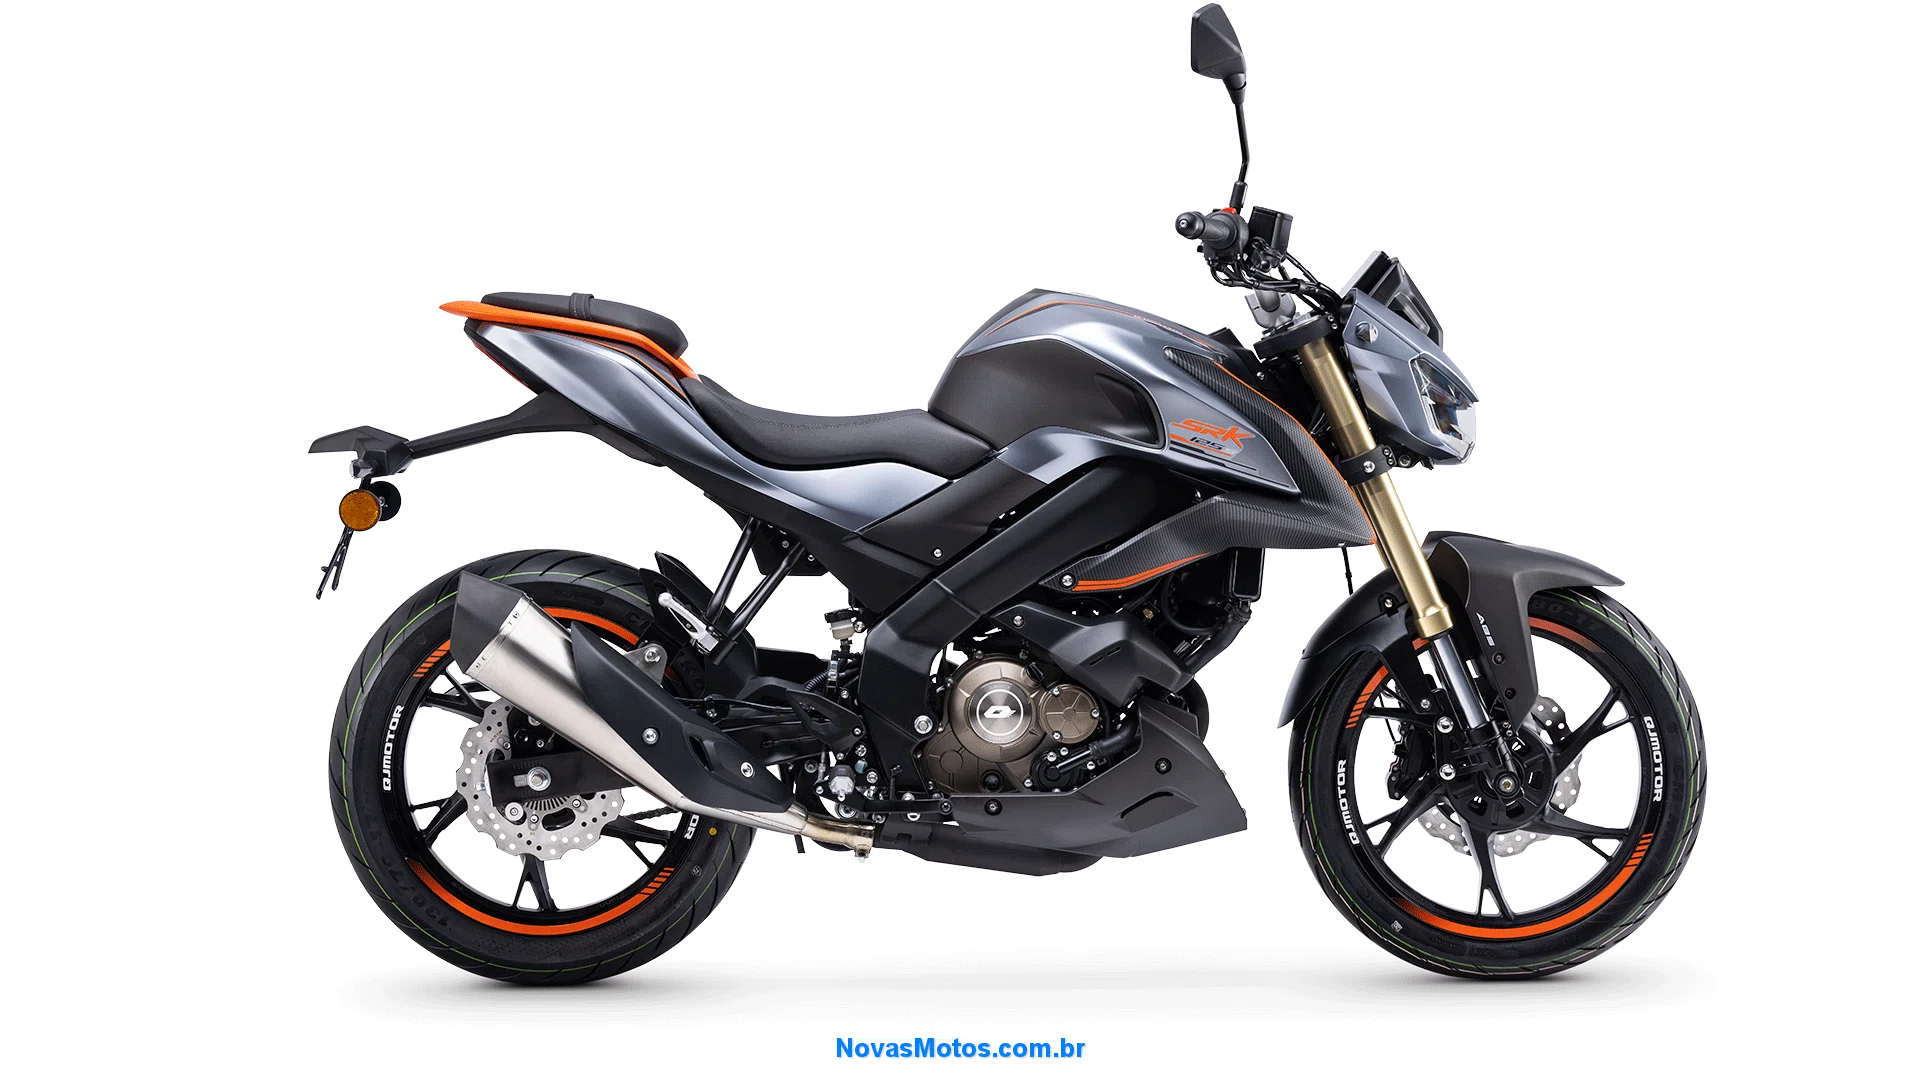 cores-qj-motor-srk-125 QJMotor SRK 125: Seria a moto mais bonita do momento?